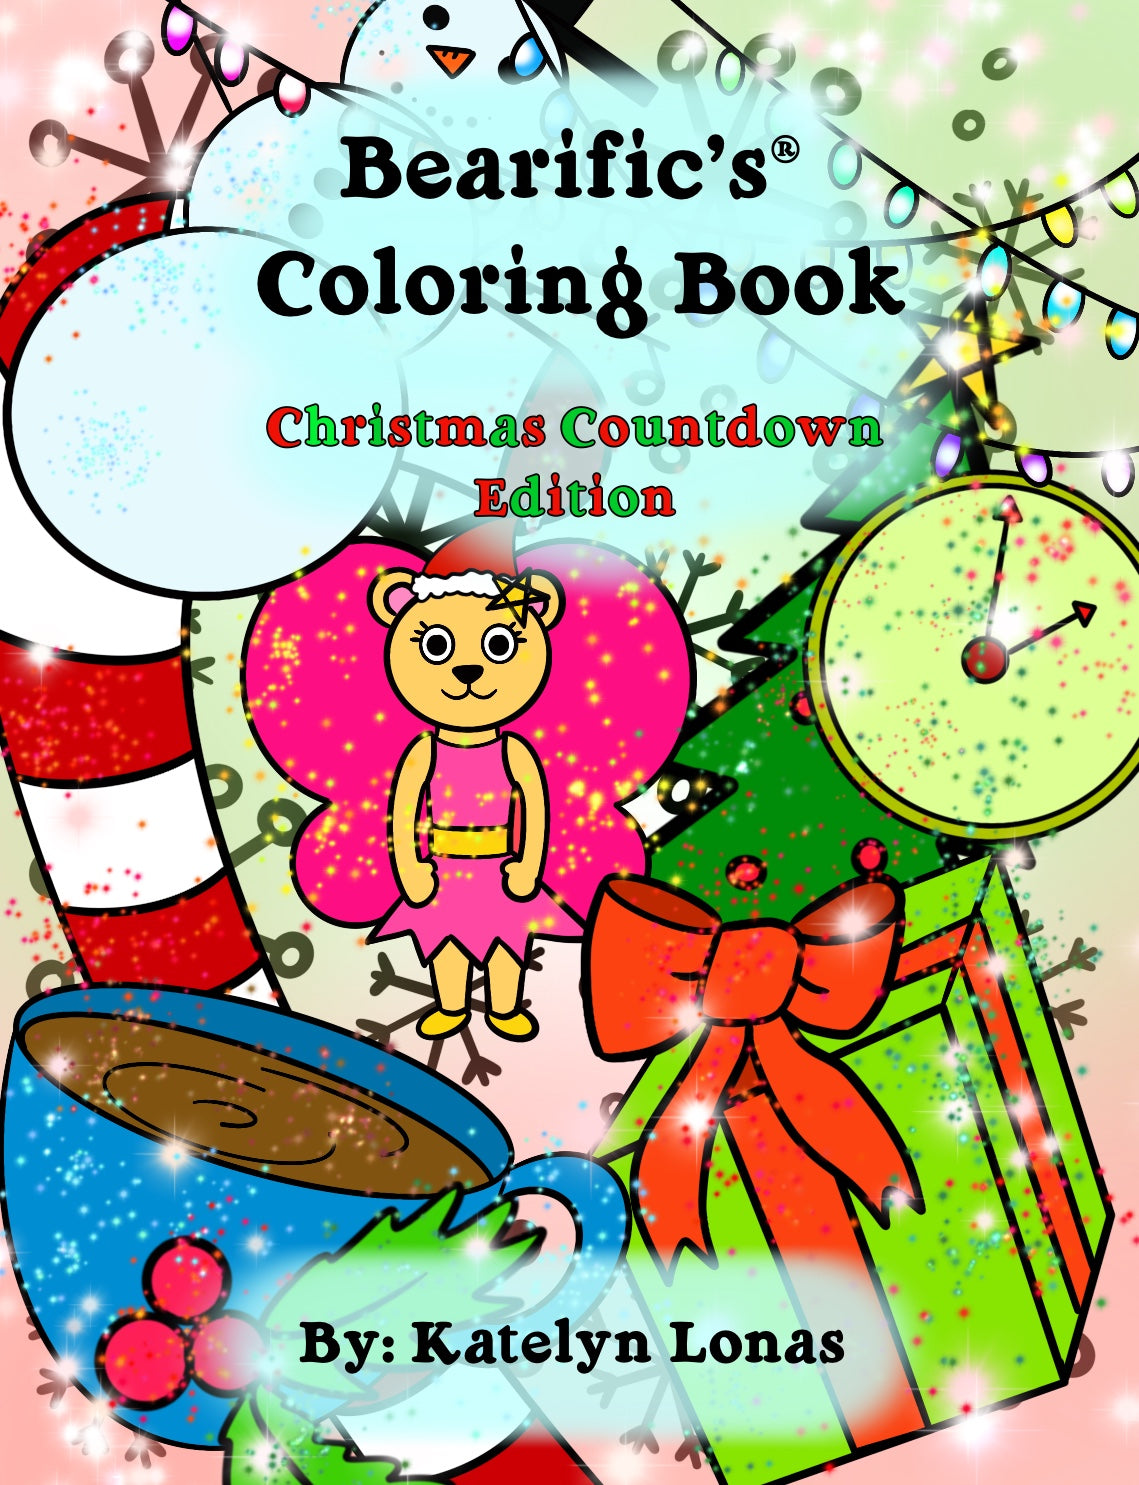 Bearific’s® Coloring Book: Christmas Countdown Edition